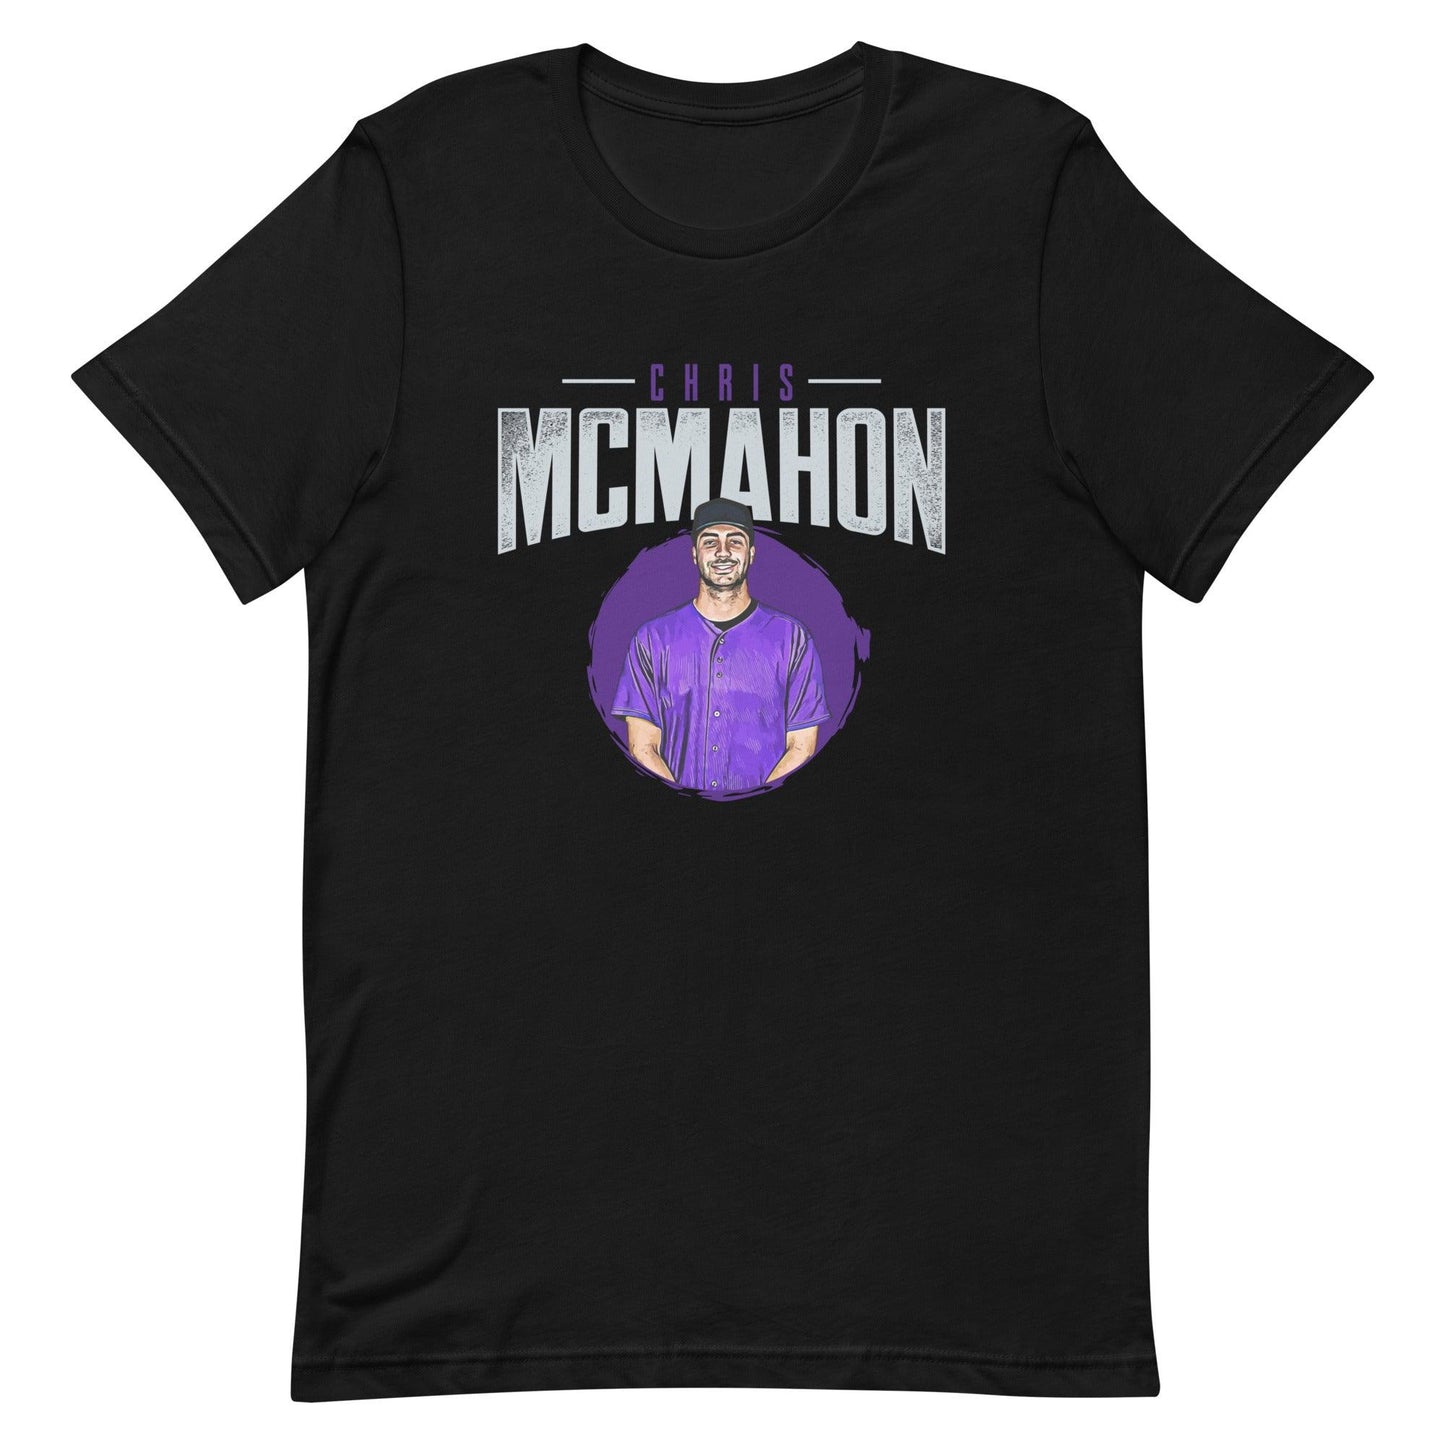 Chris McMahon "Lineup" t-shirt - Fan Arch